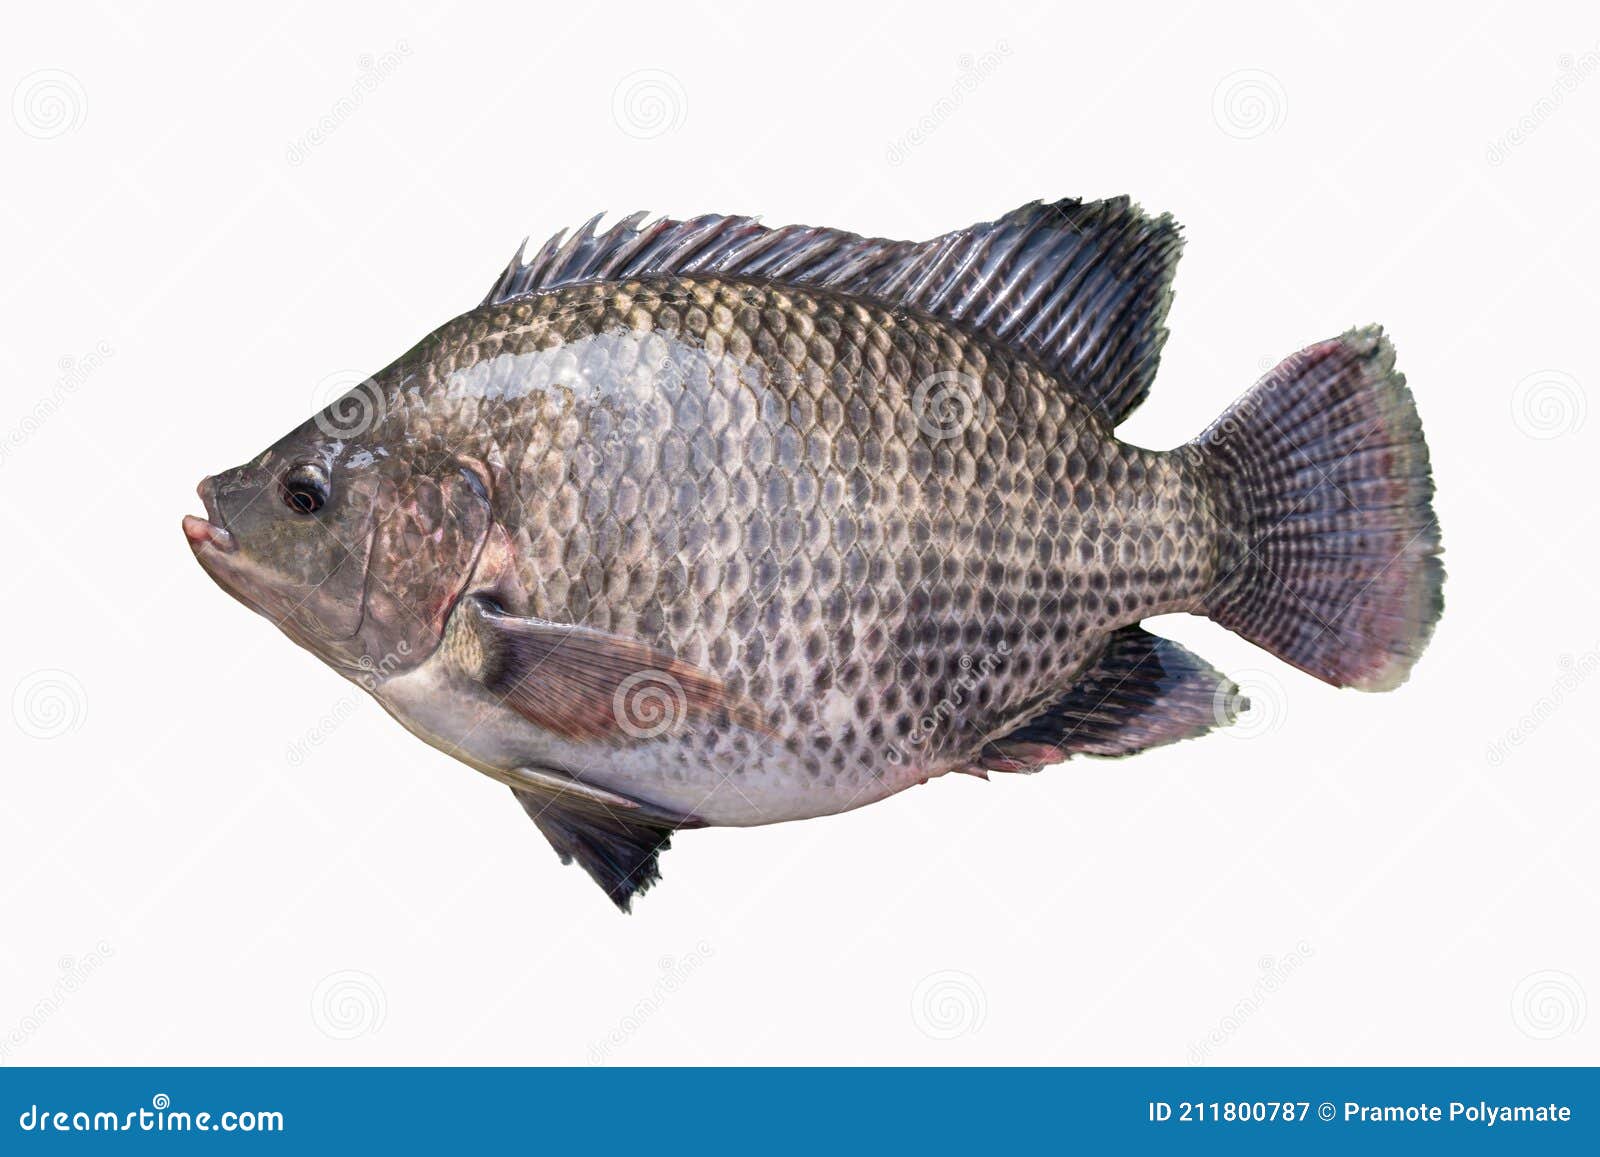 big plentiful fat tilapia fish  on white background